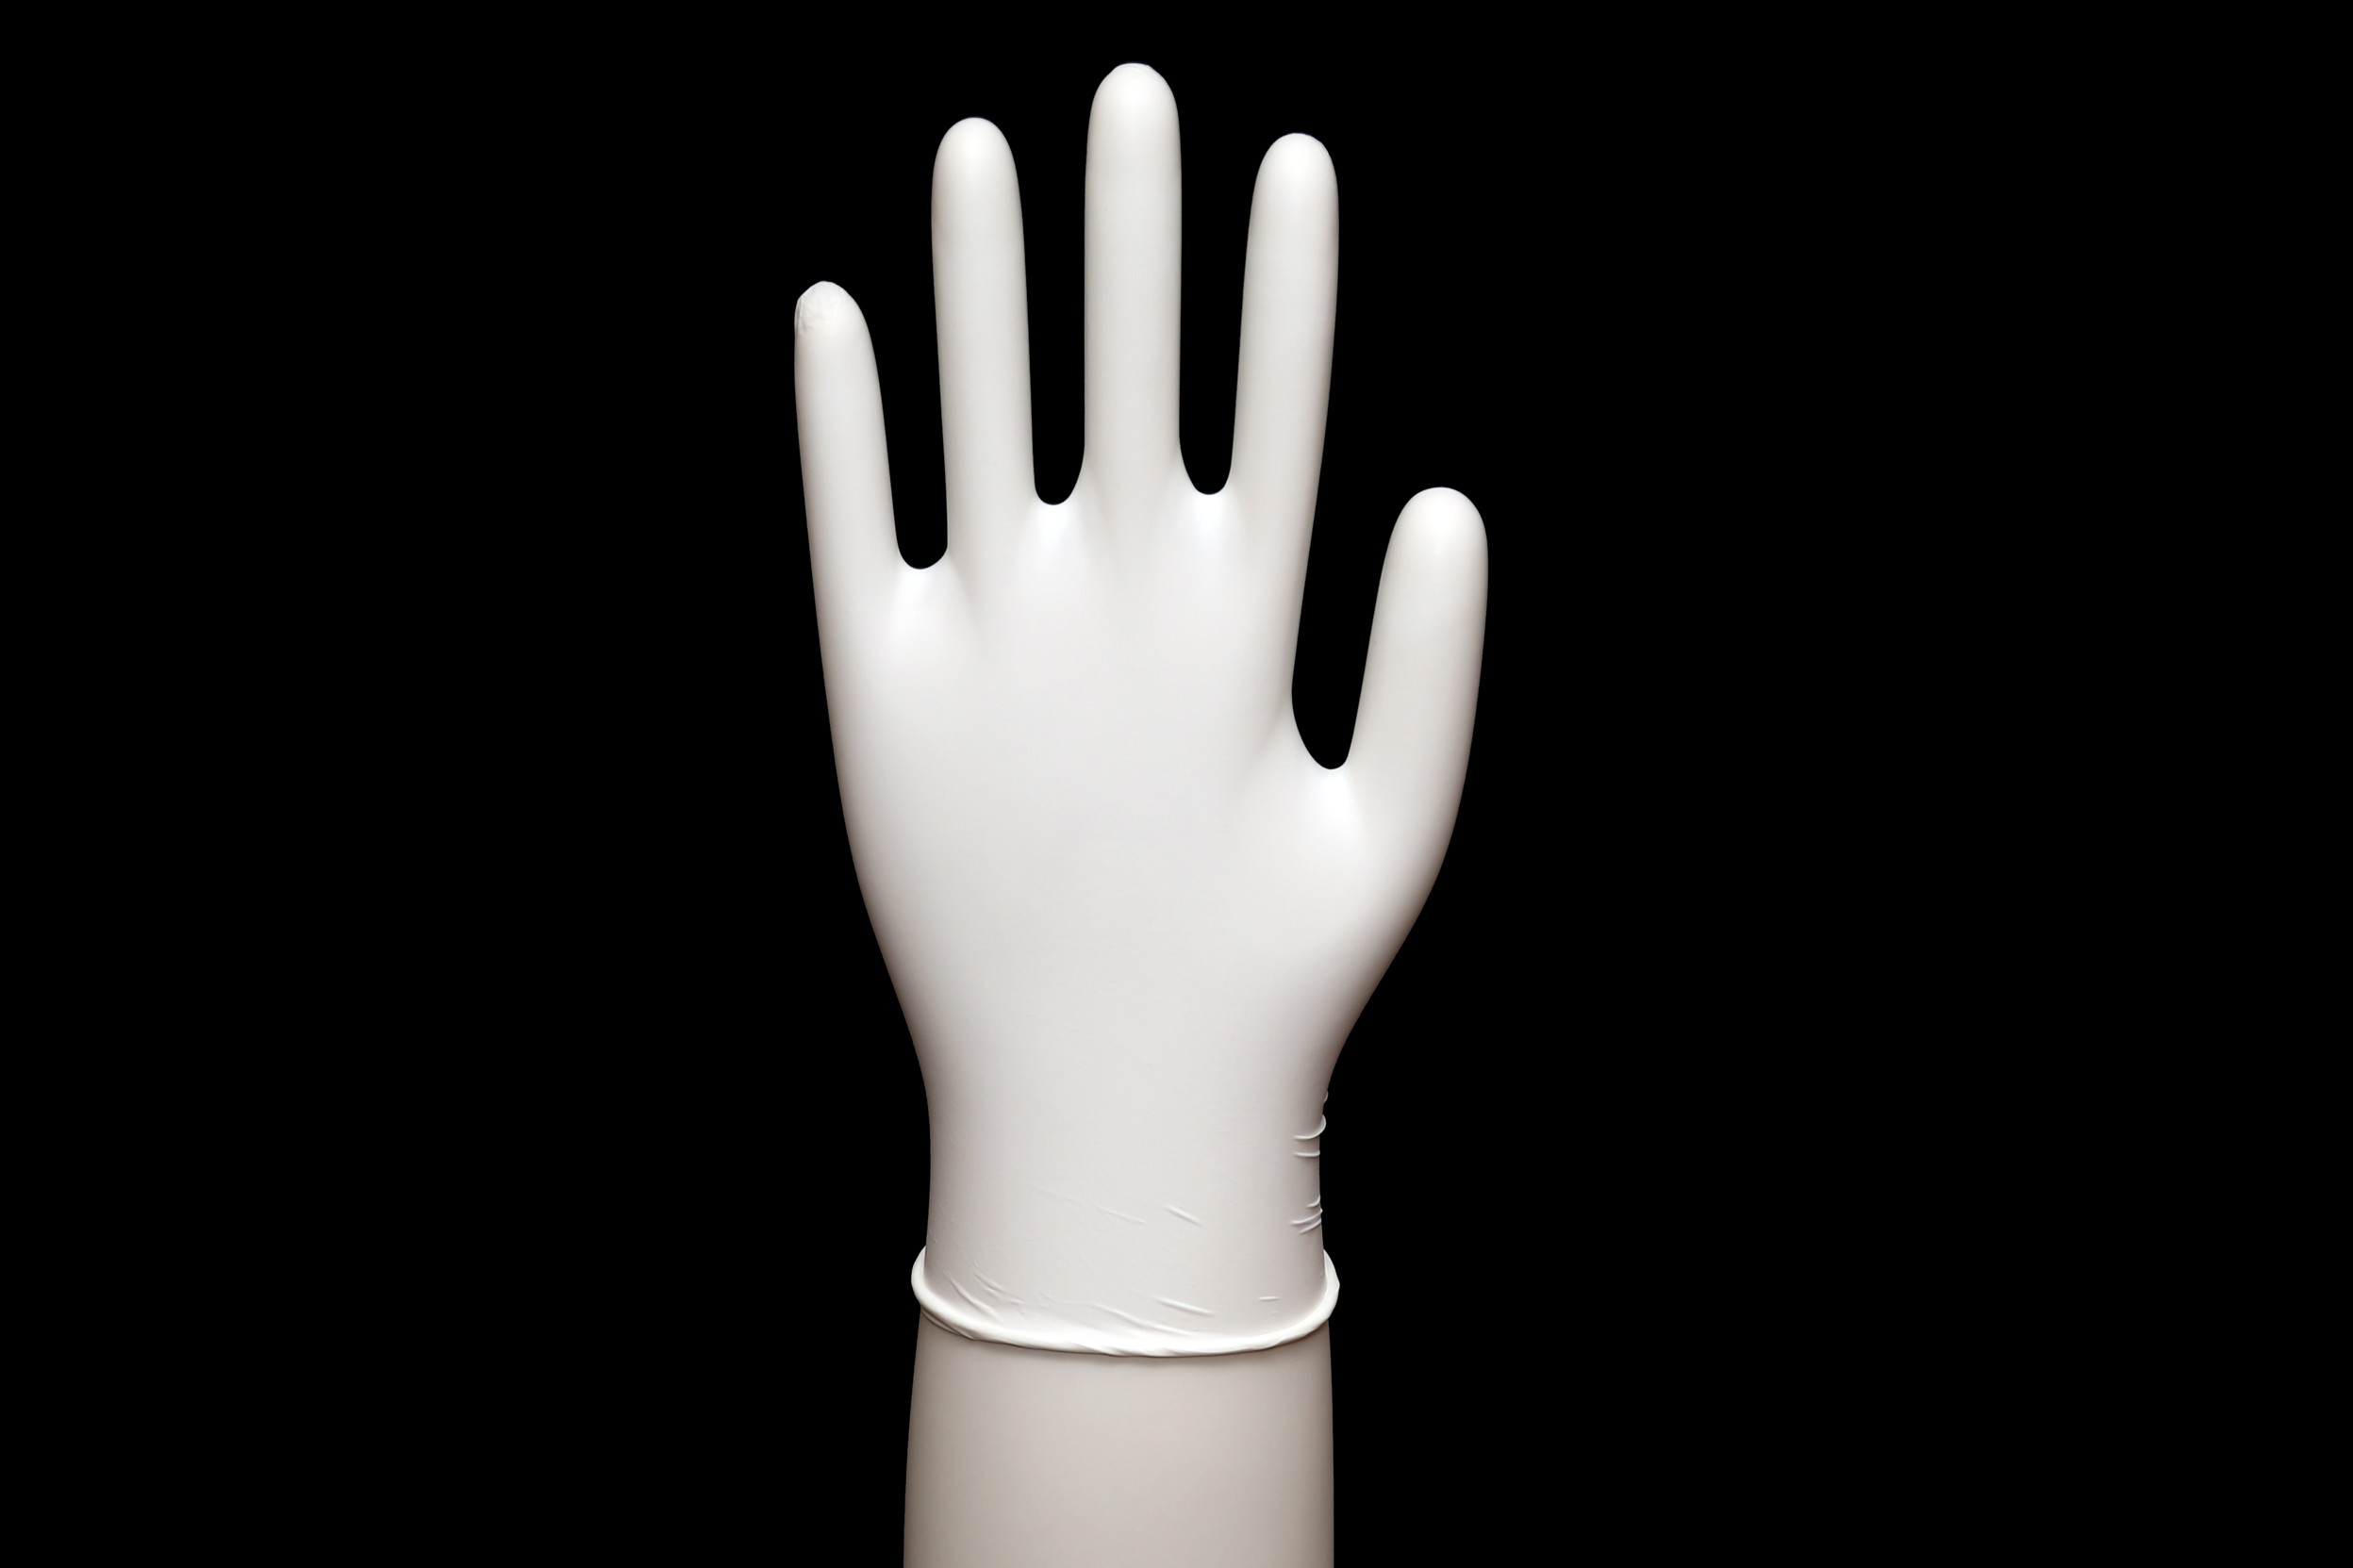 Powder-Free Latex Gloves, Medium, Ivory, 100/Box